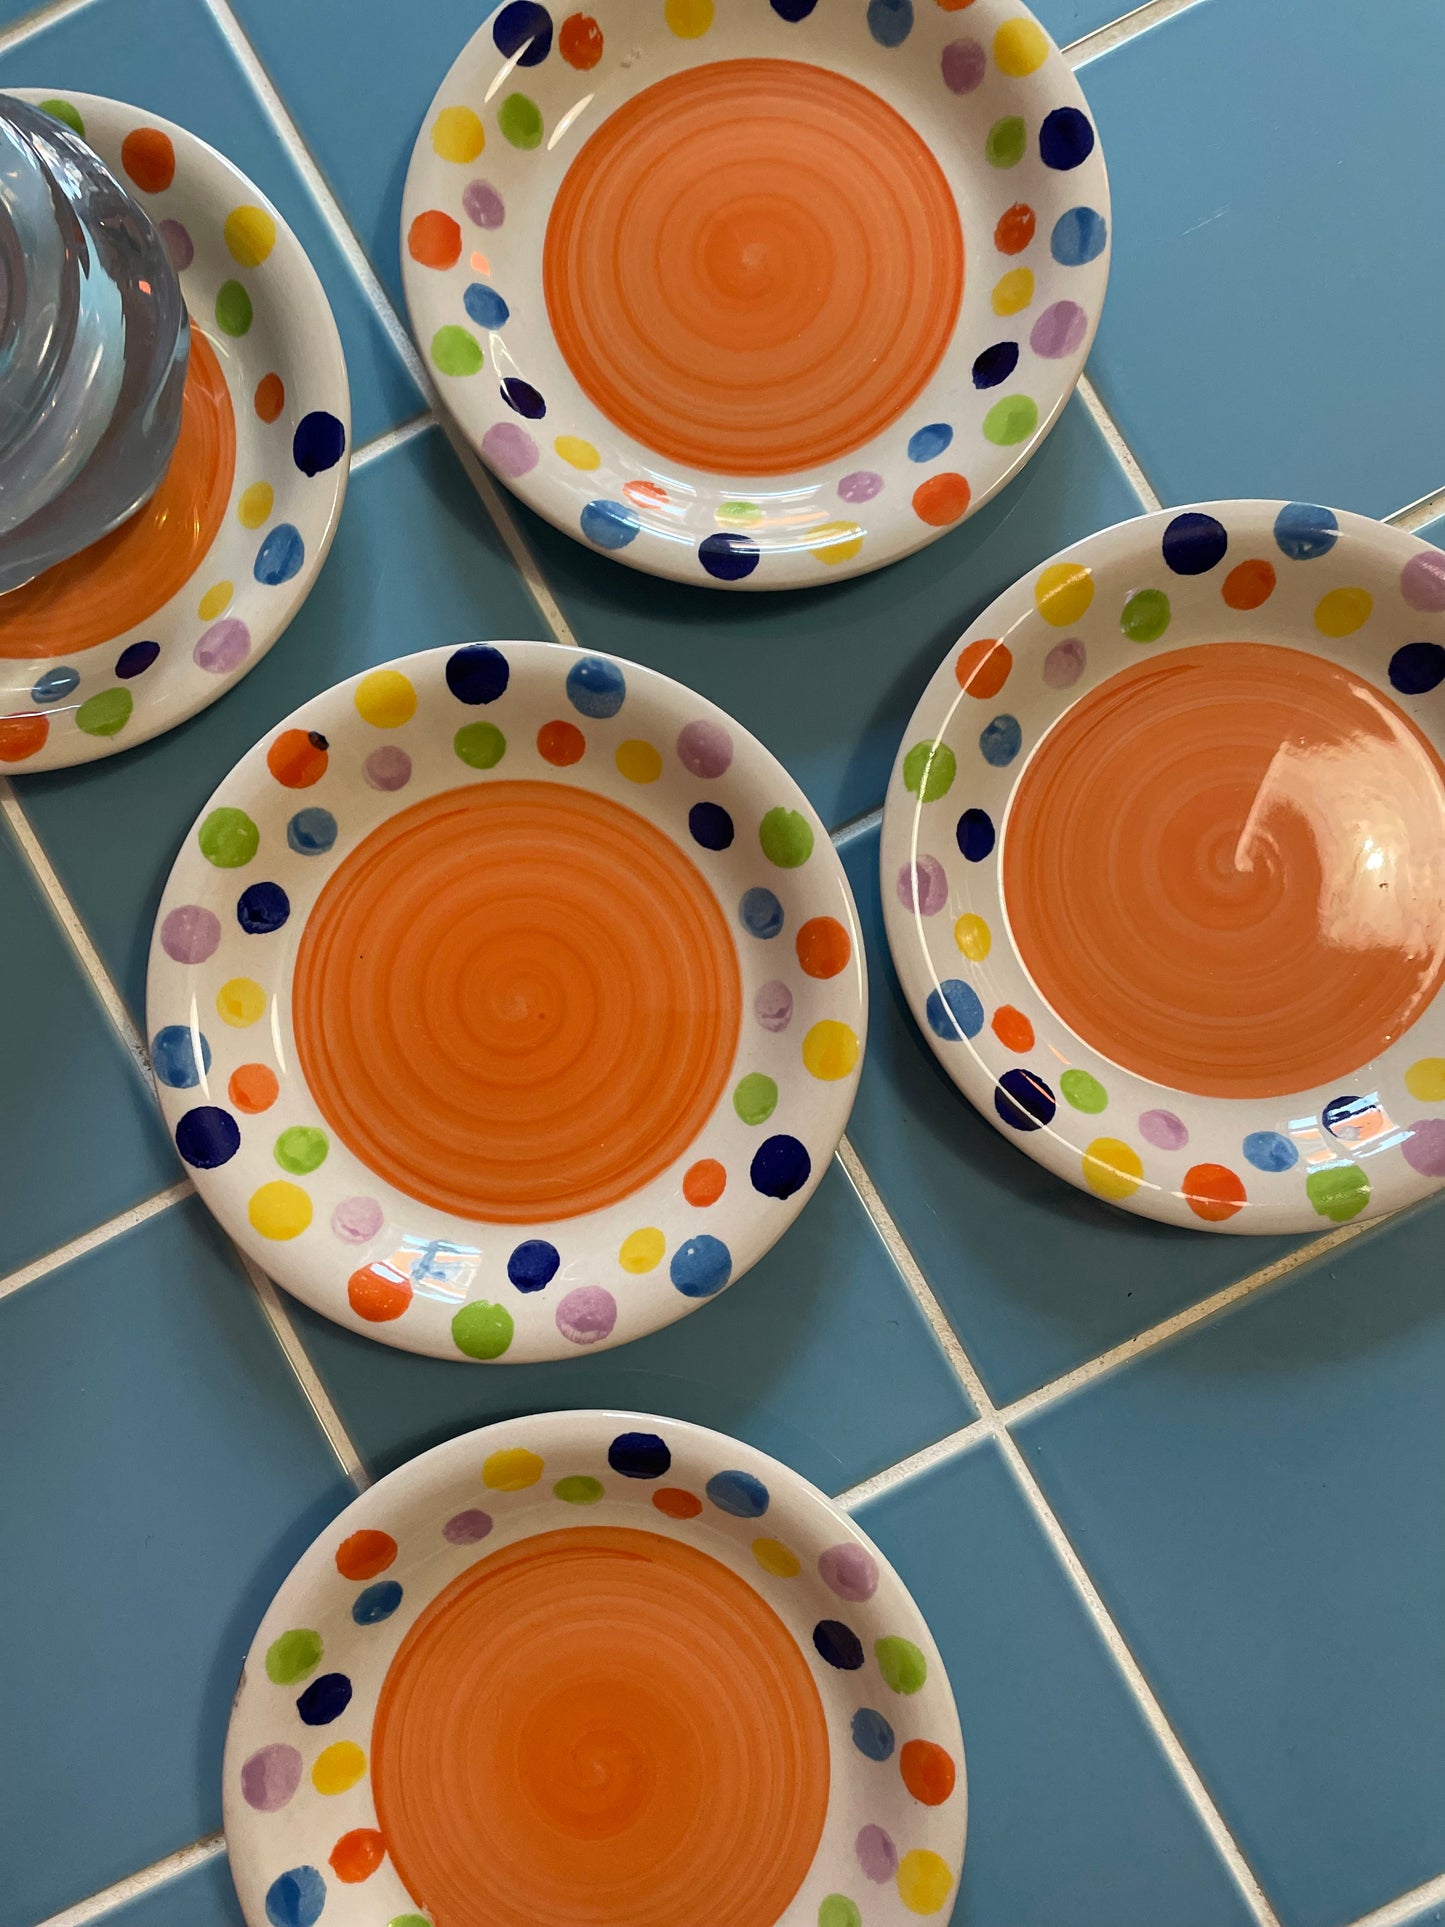 Tivoli style lunch plates with orange centre